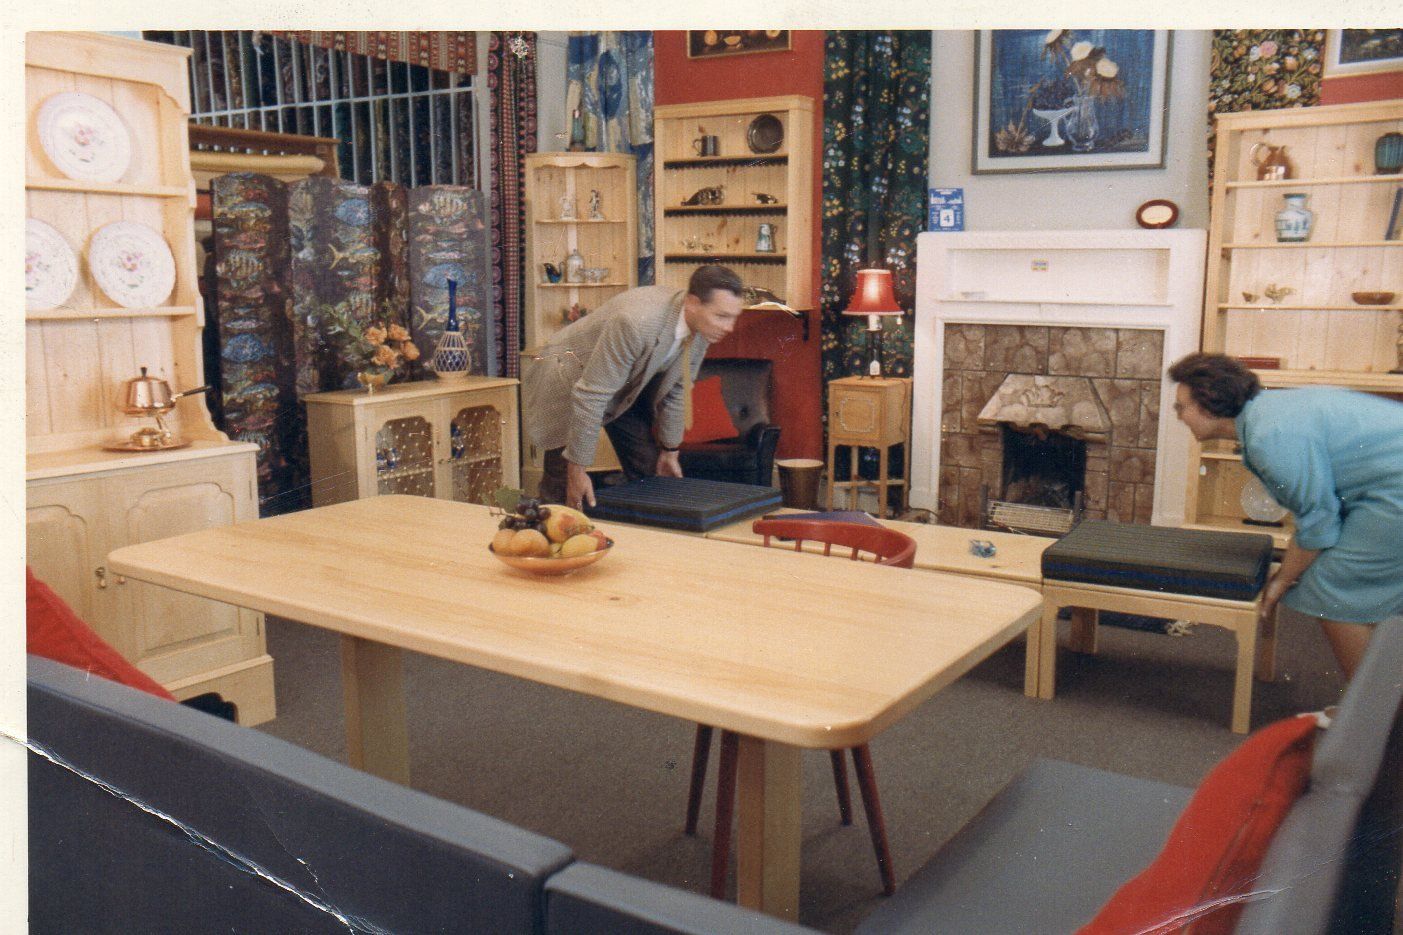 Staff rearranging furniture for Quaeck's furniture shop